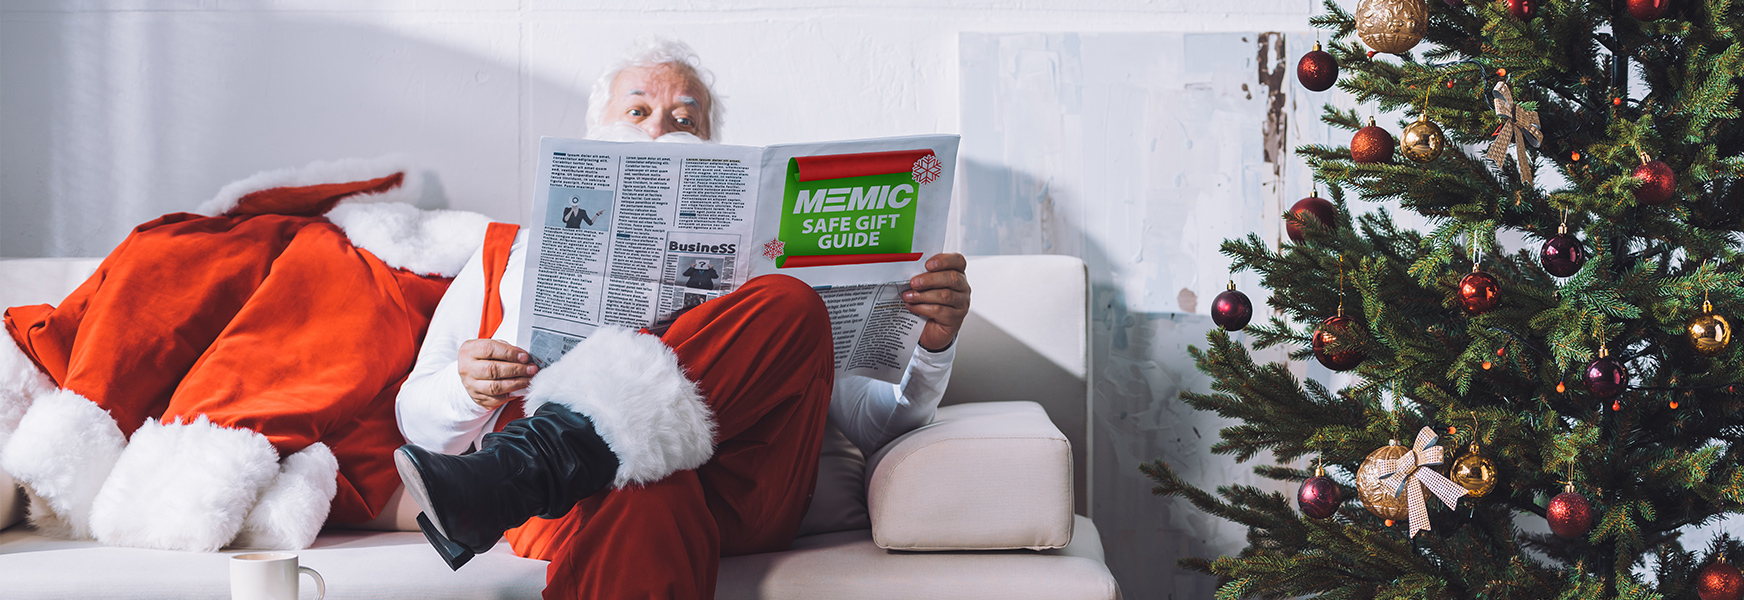 Santa Claus reading MEMIC Safe Gift Guide